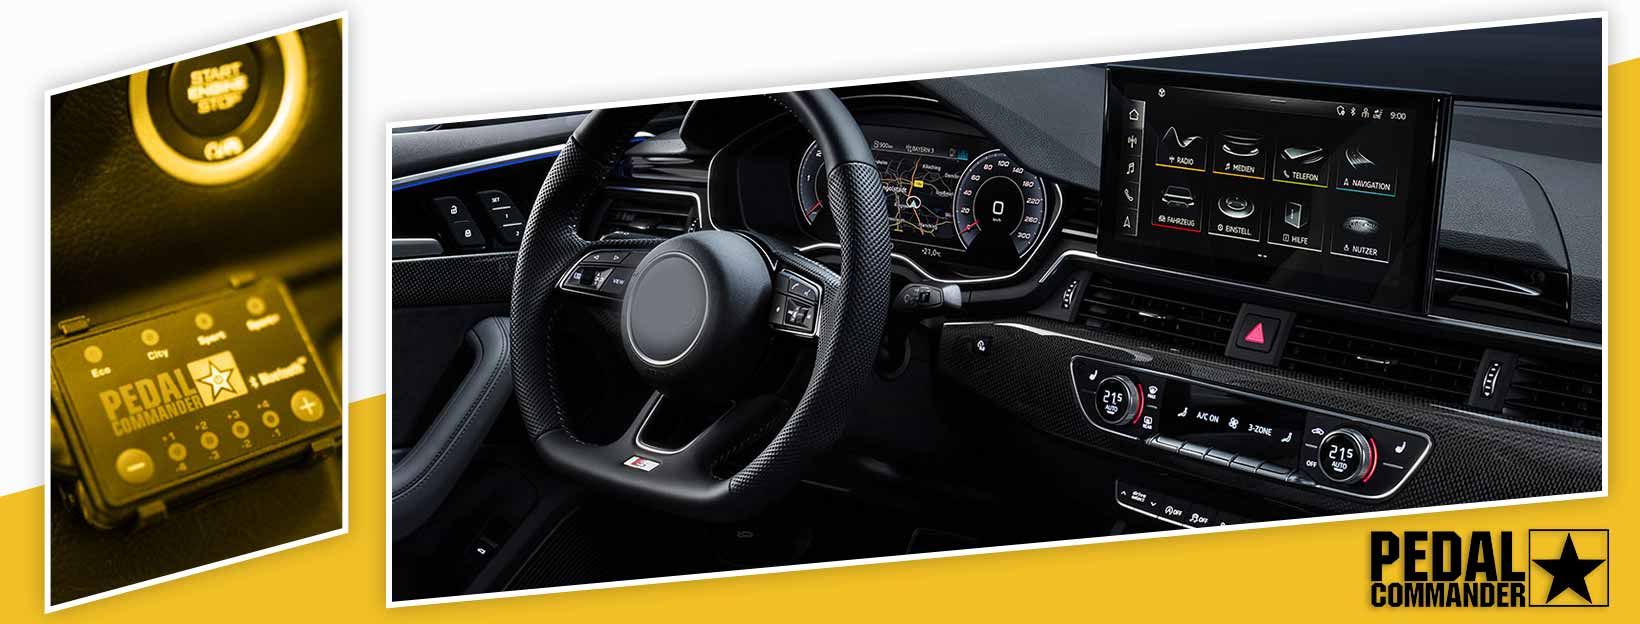 Pedal Commander for Audi S5 - interior